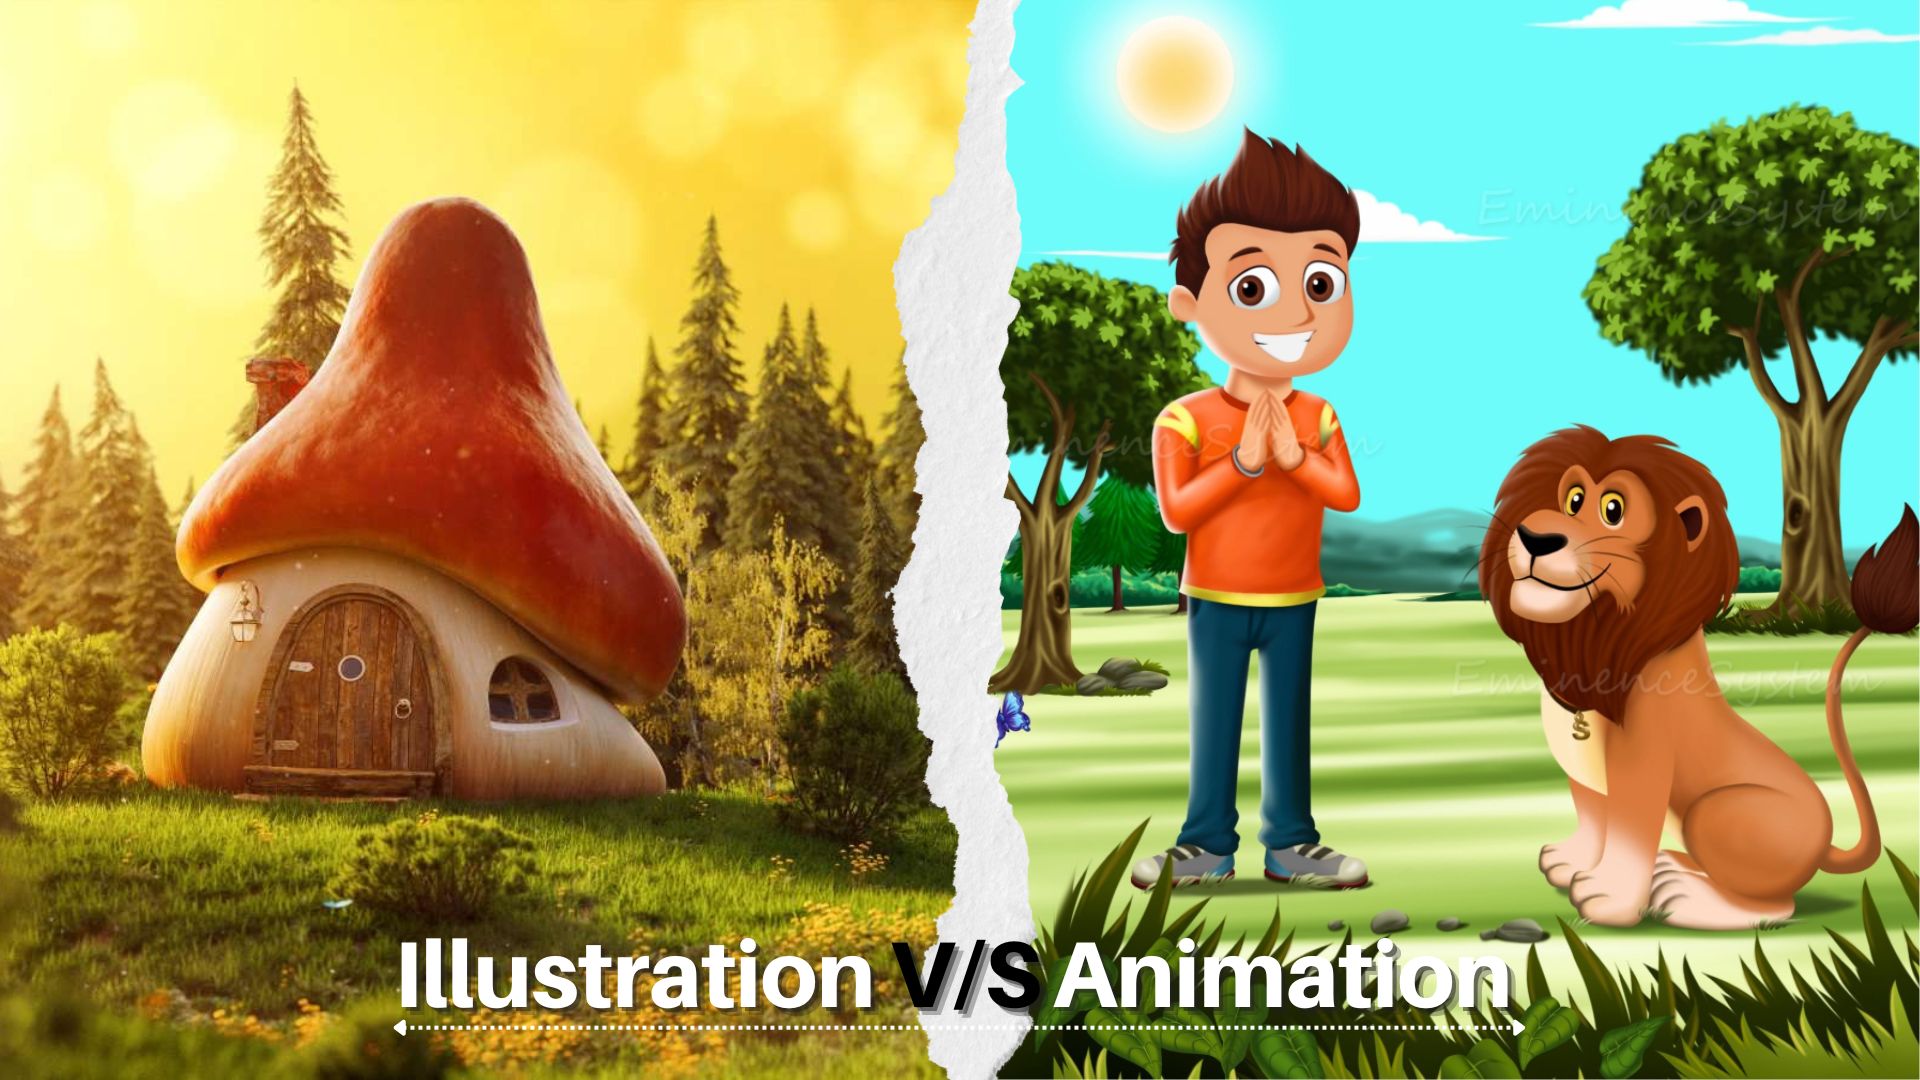 Animation & Illustration